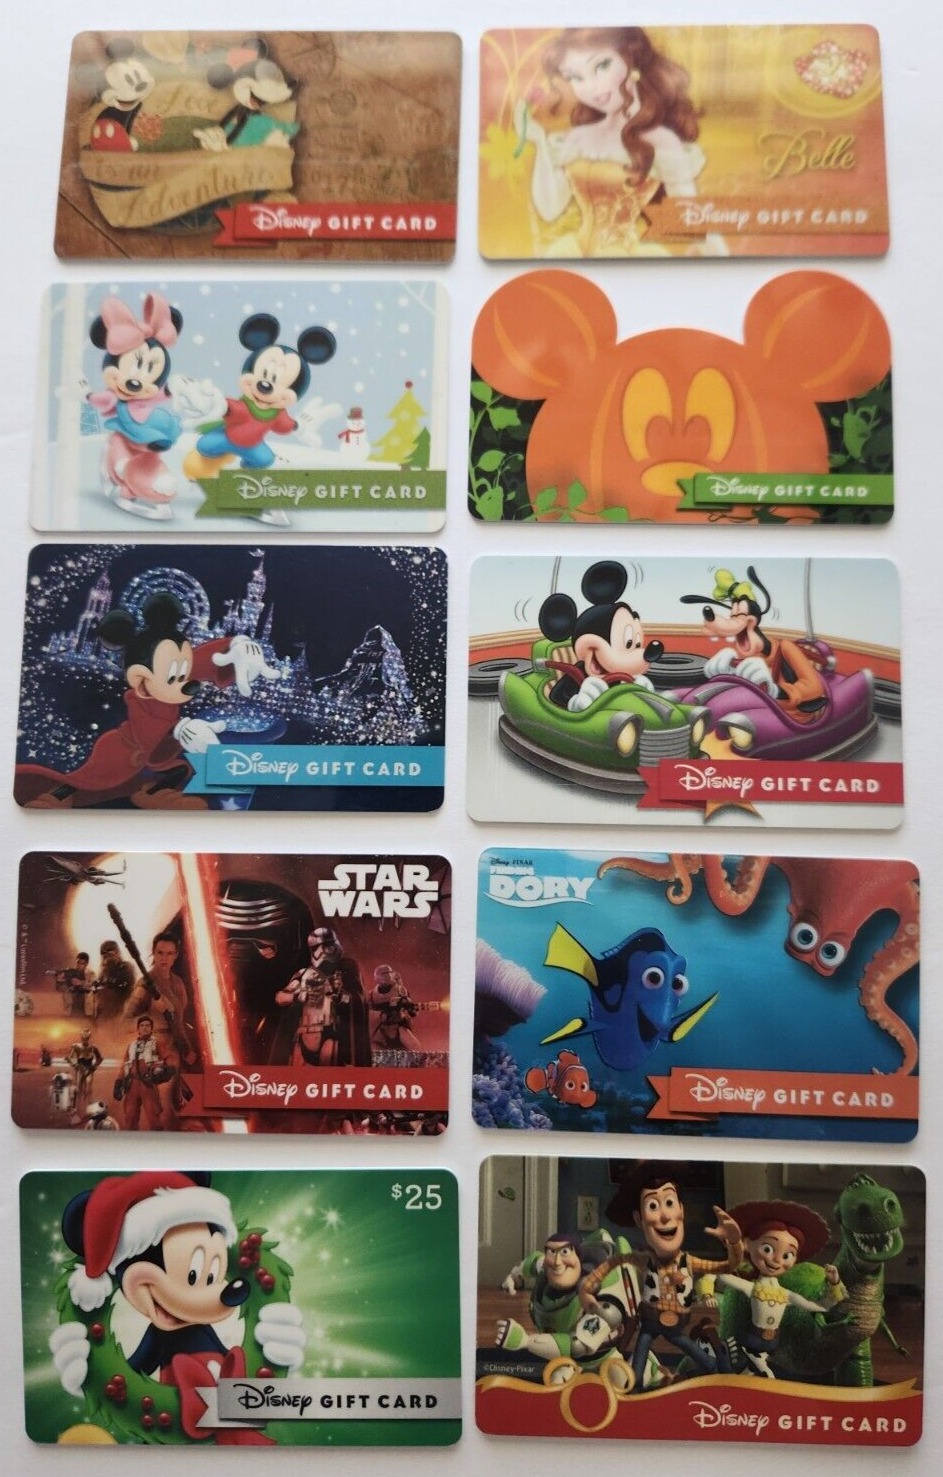 Vintage Disney Lot of 10 Used Disneyland Gift Cards No Value on Cards